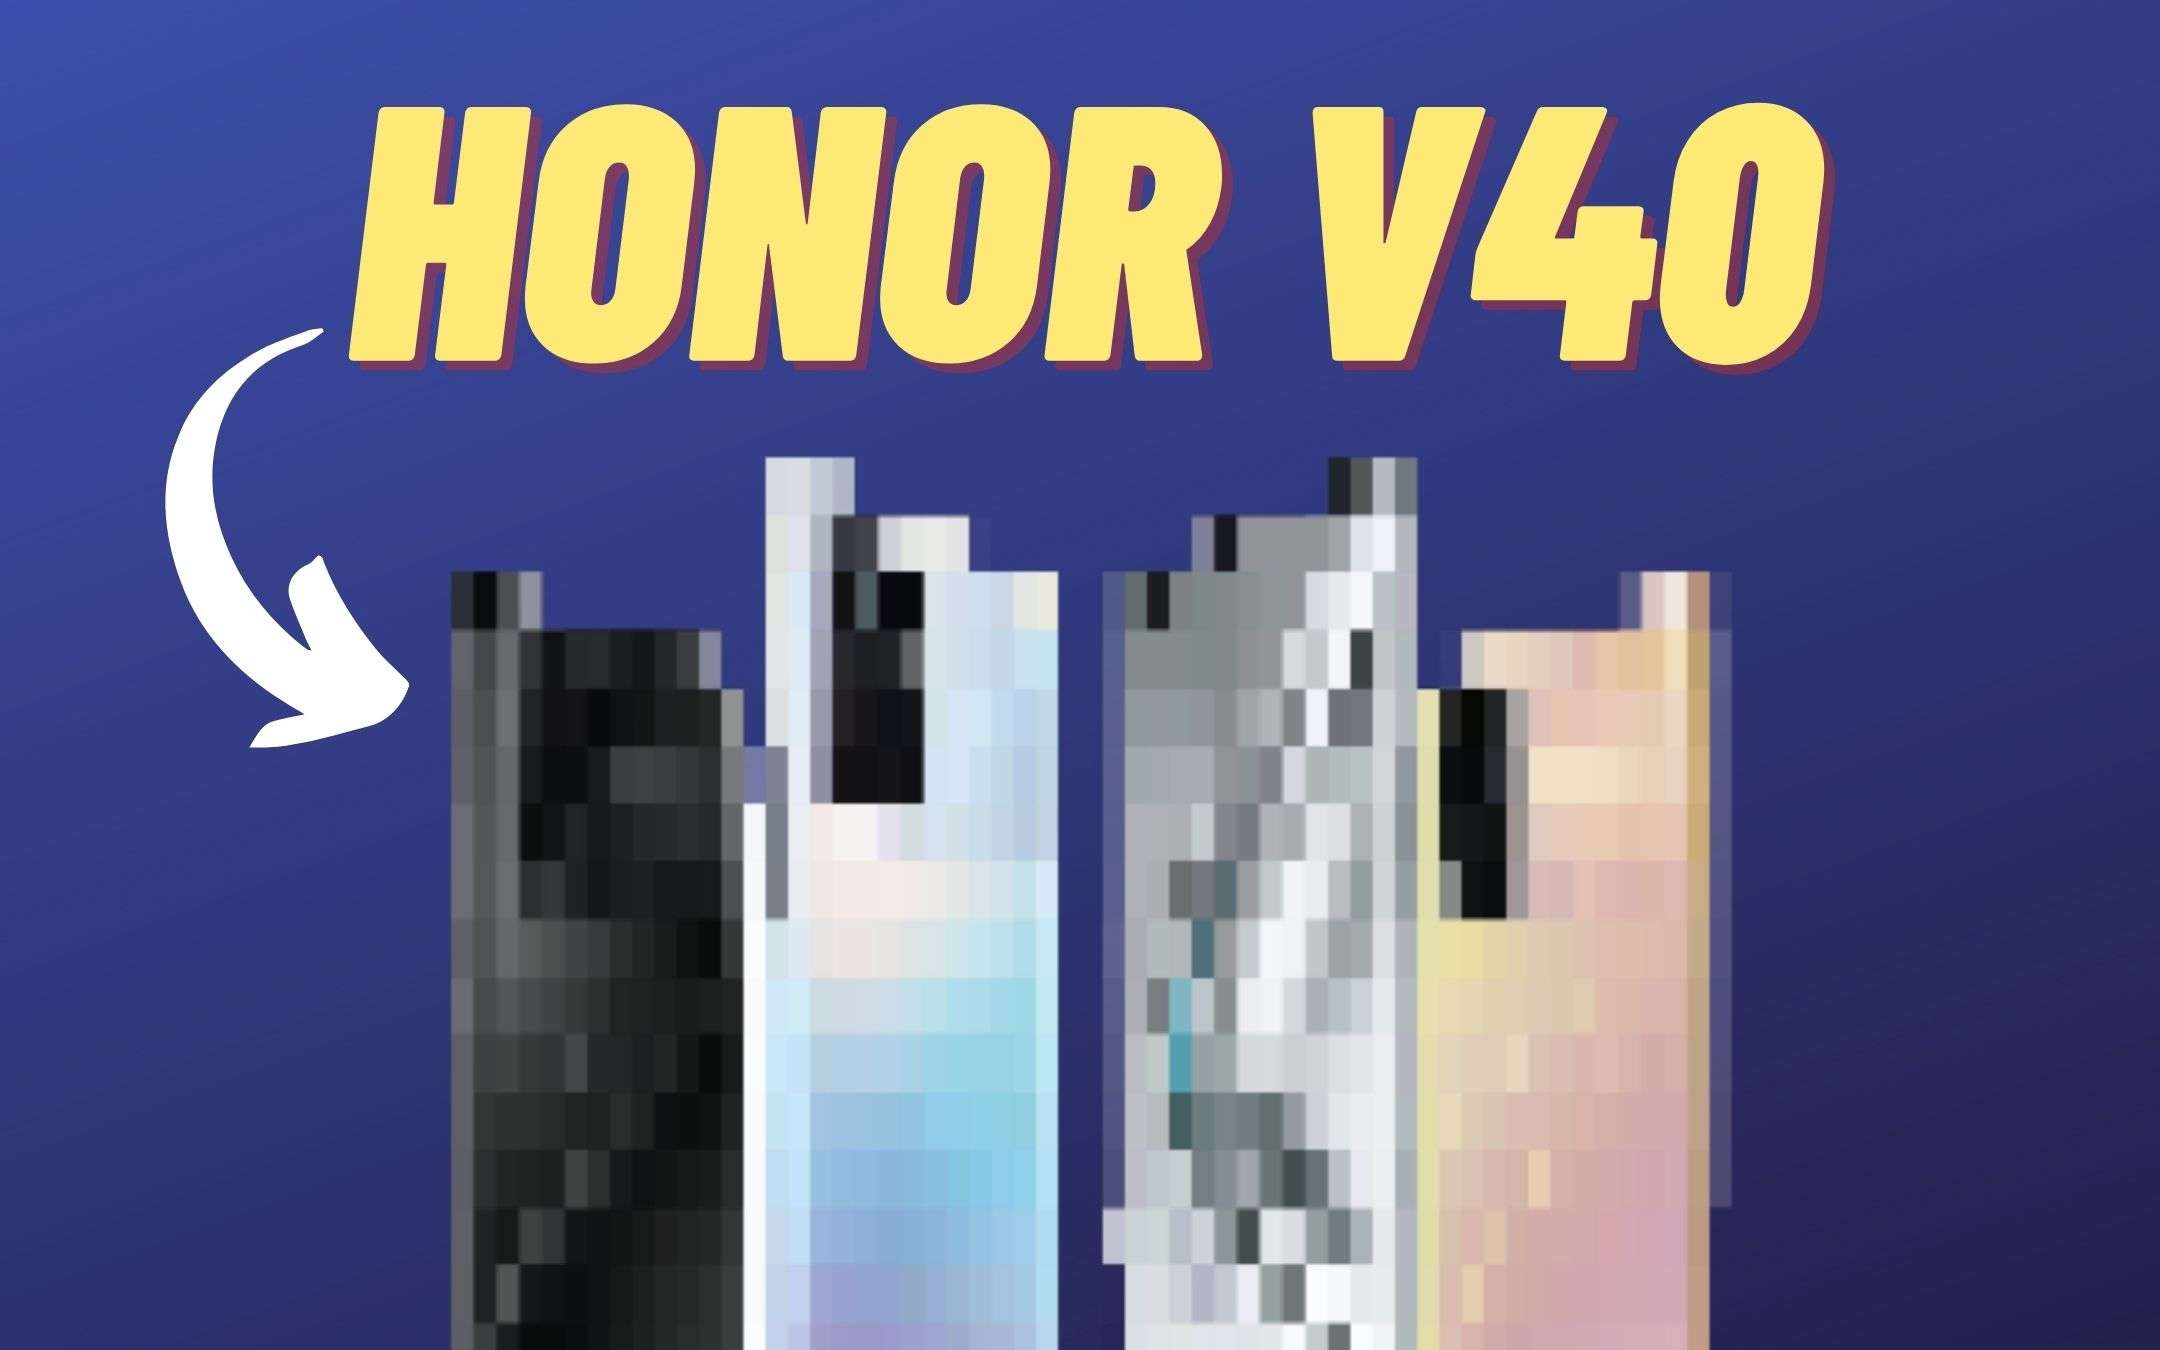 Honor V40 senza segreti: eccolo dal vivo (FOTO)